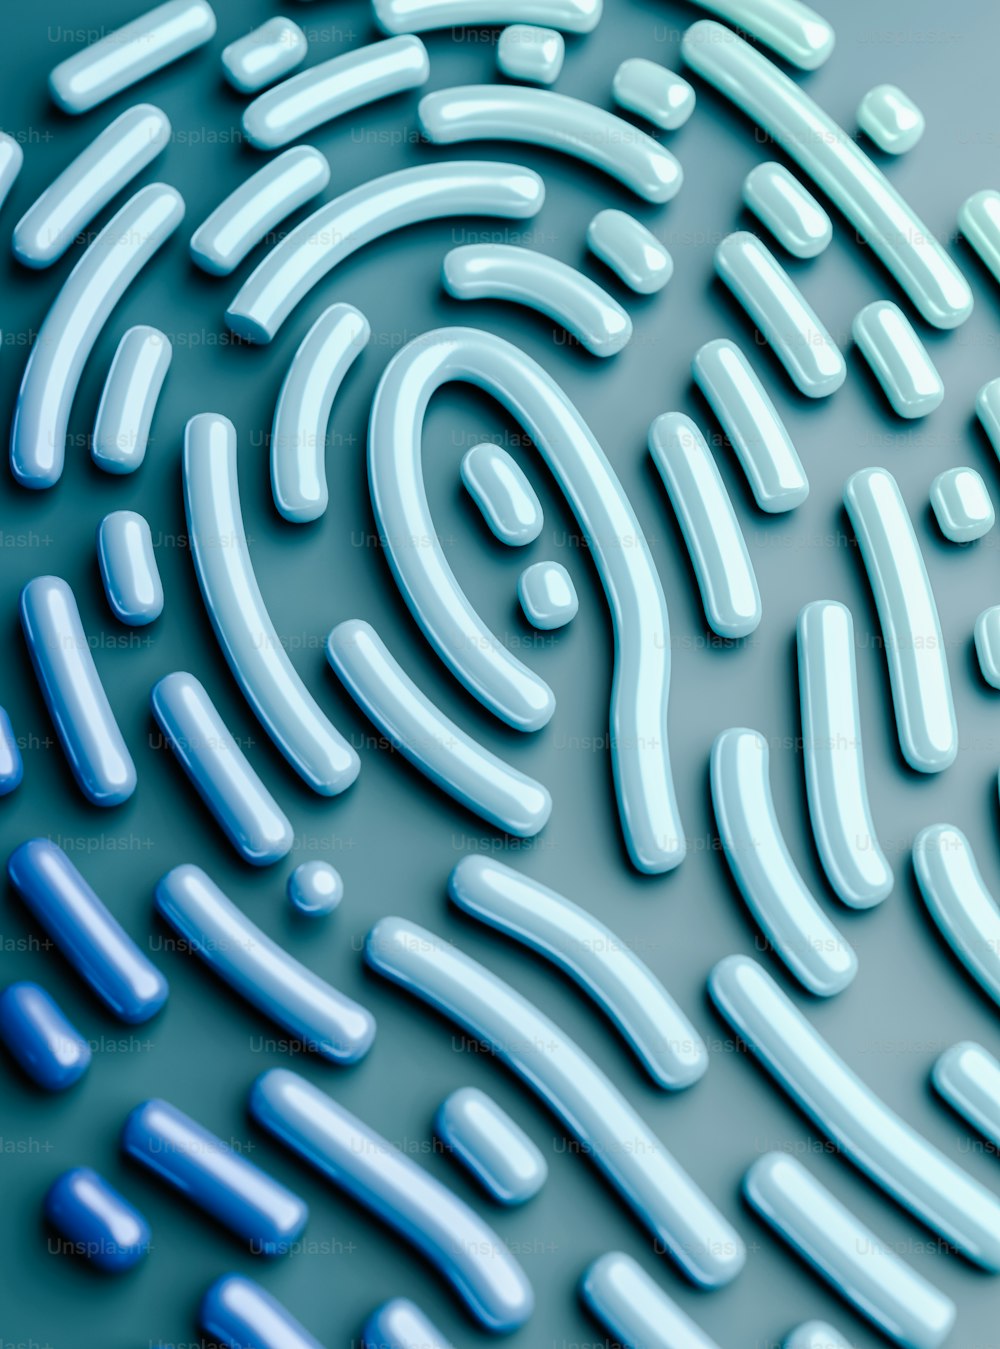 a close up of a fingerprint on a blue surface